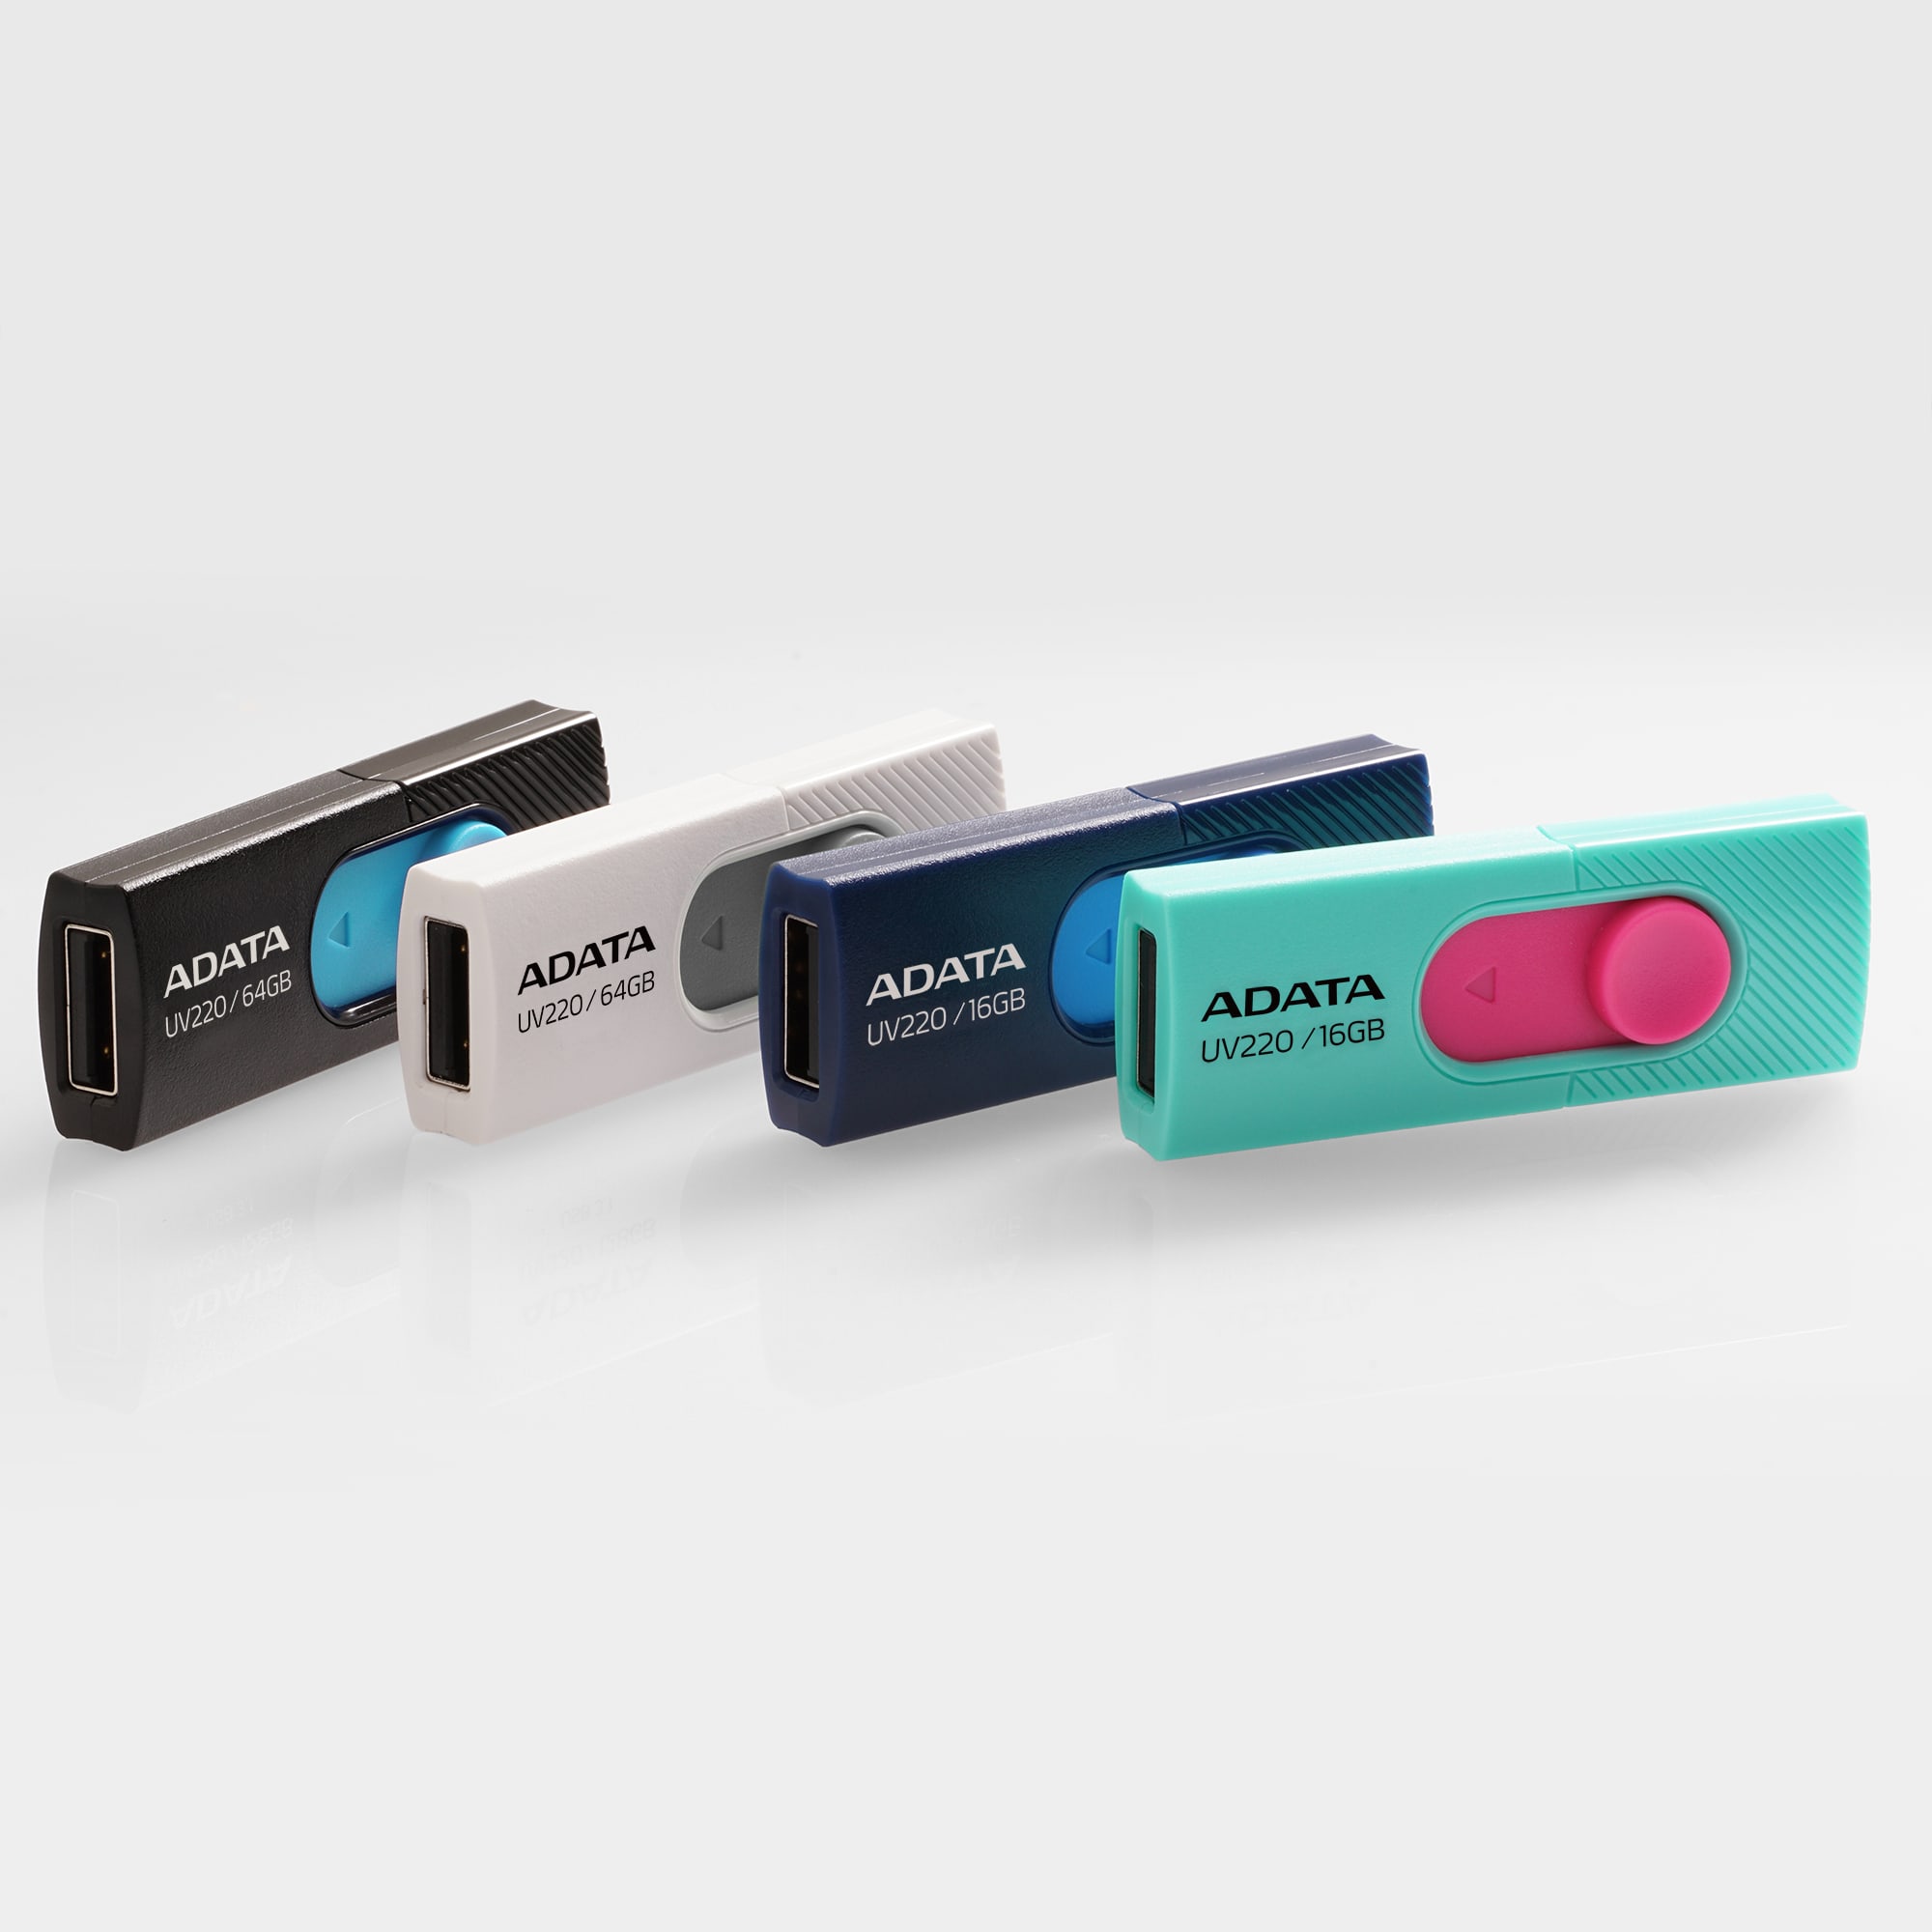 USB kľúč A-DATA UV220, 64 GB, USB 2.0, čierny